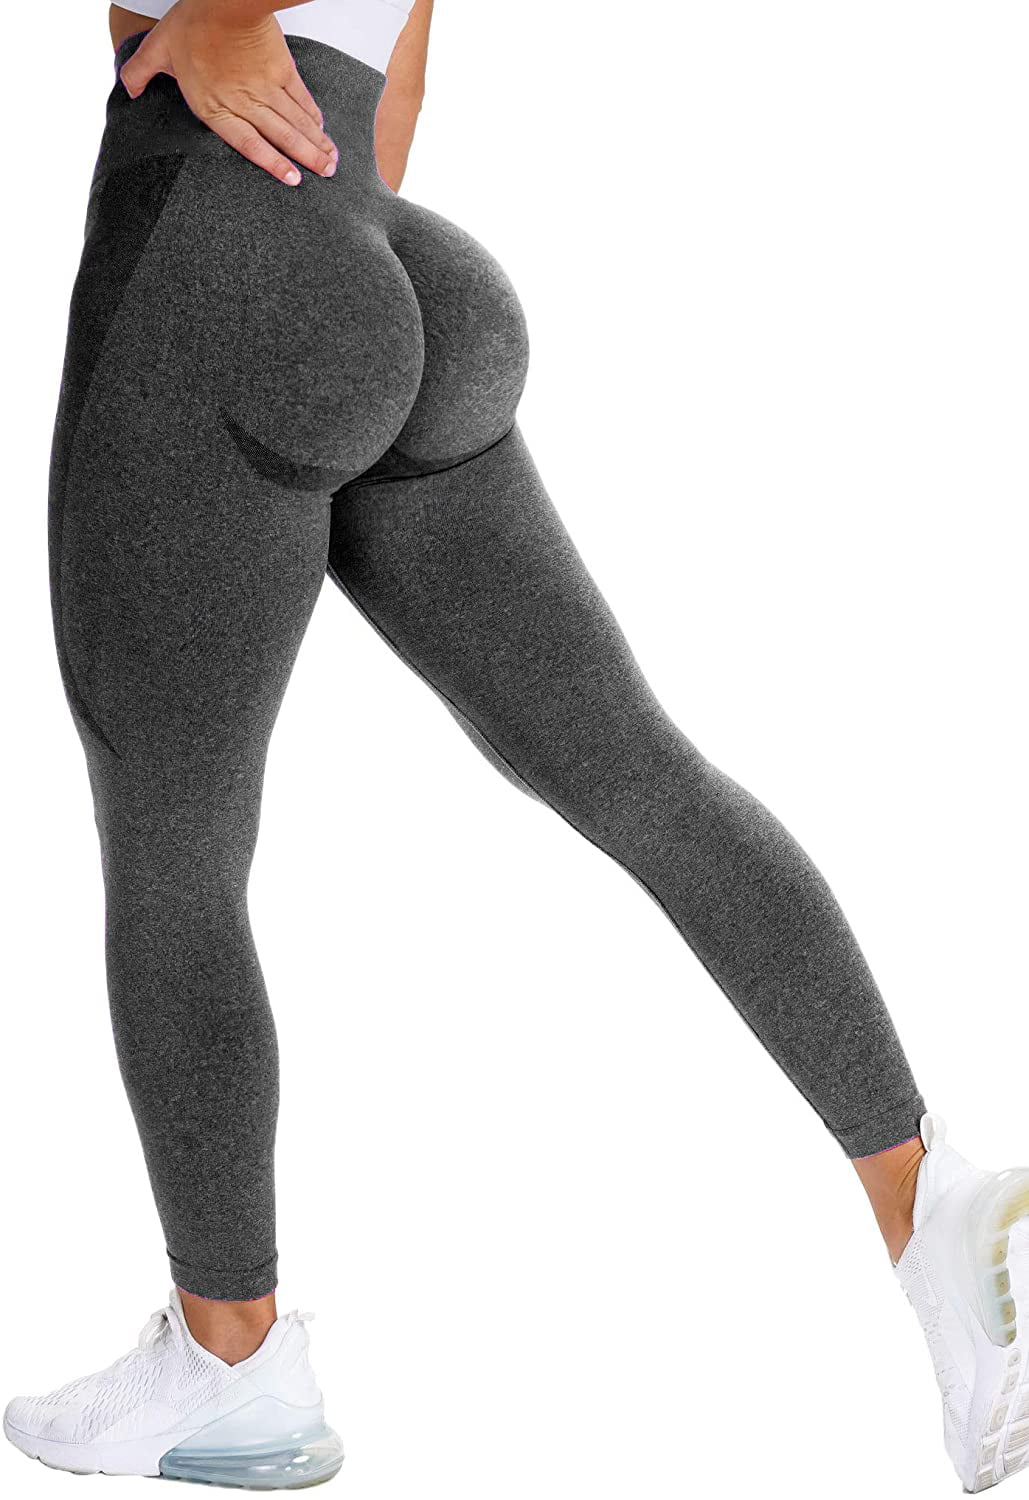 COMFREE Women High Waist Workout Gym Smile Contour Seamless Leggings Tummy  Control Yoga Pants Tights Sports Compression 